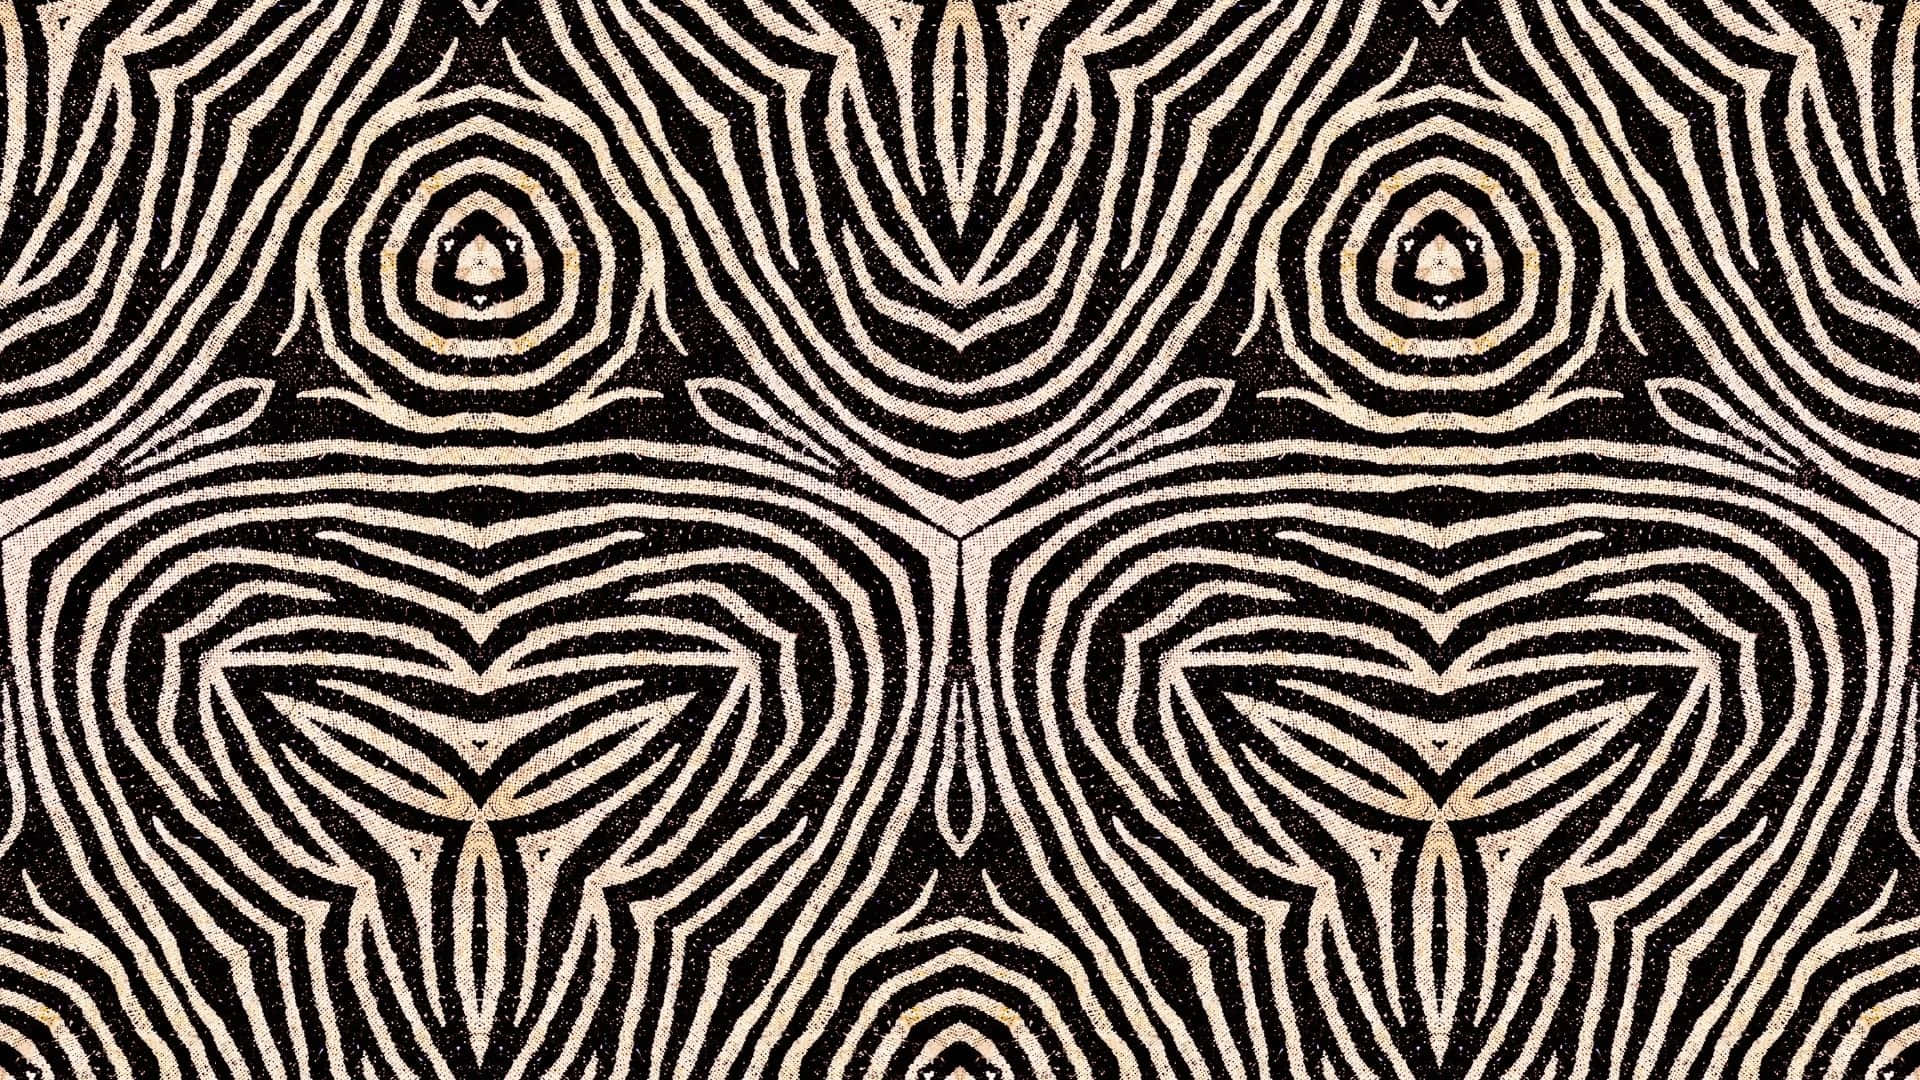 a black and white zebra pattern